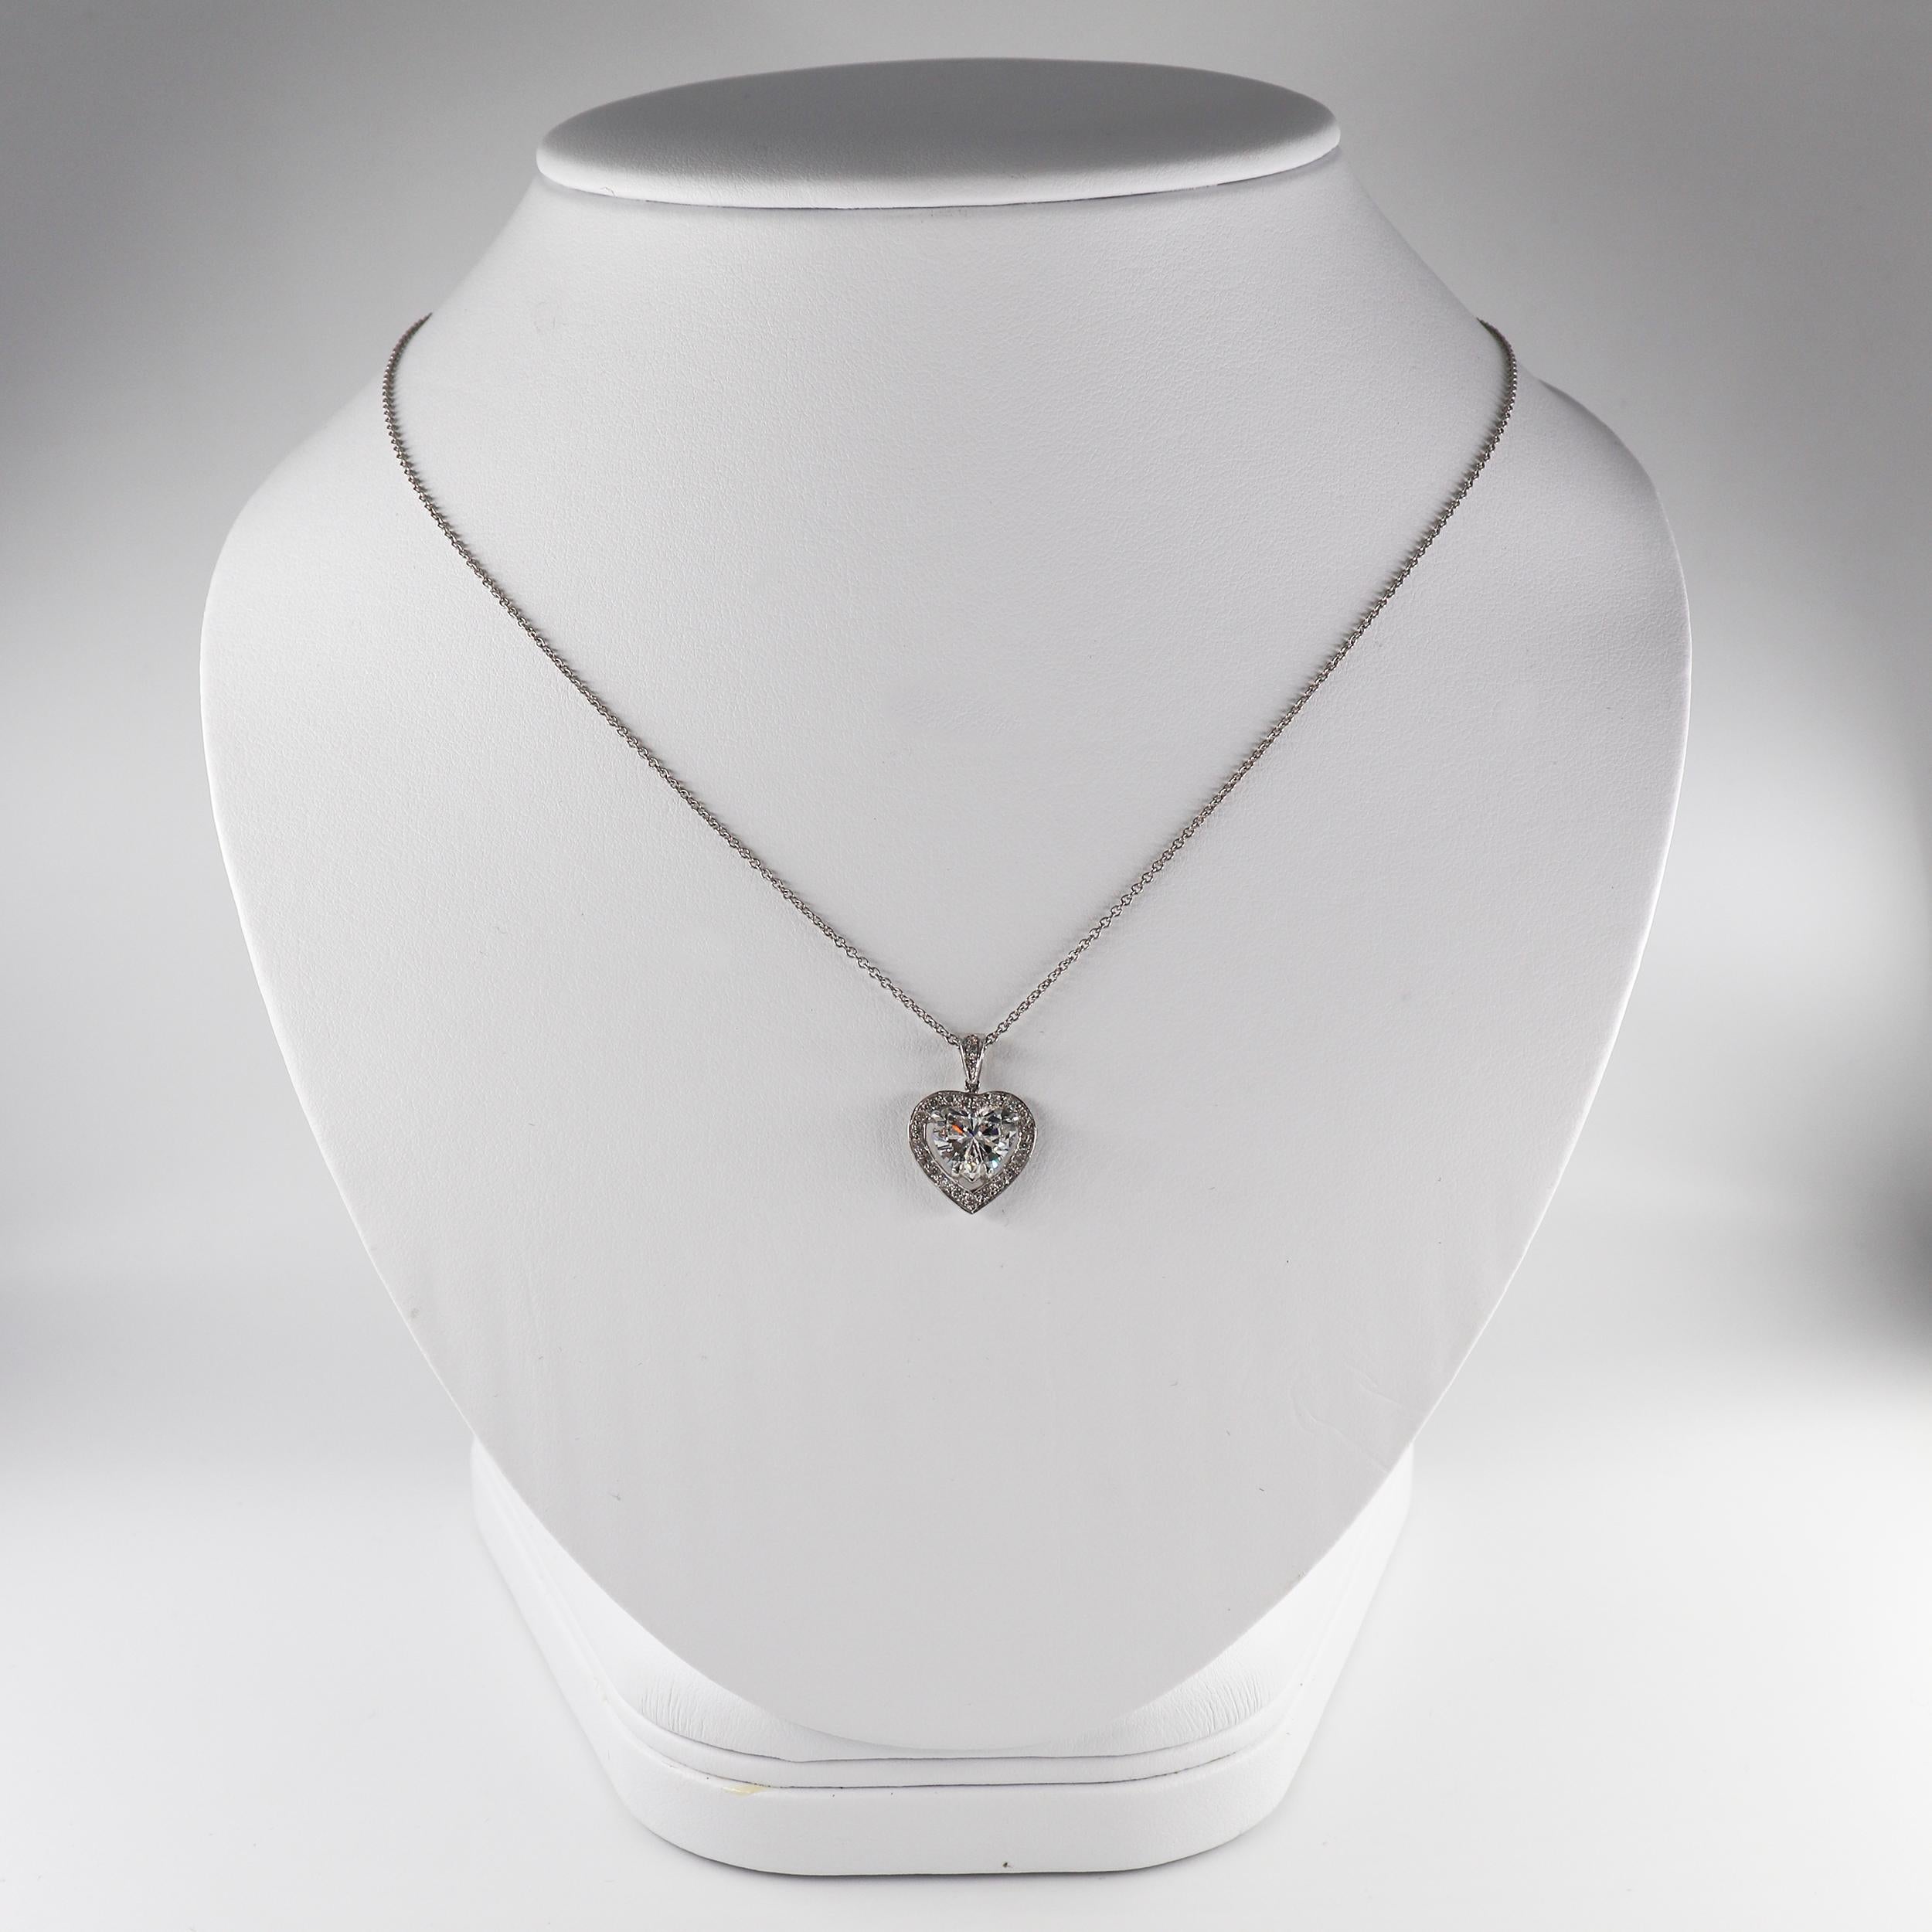 Contemporary J. Birnbach 1.52 Carat Heart-shaped Diamond Pendant Necklace GIA Certified